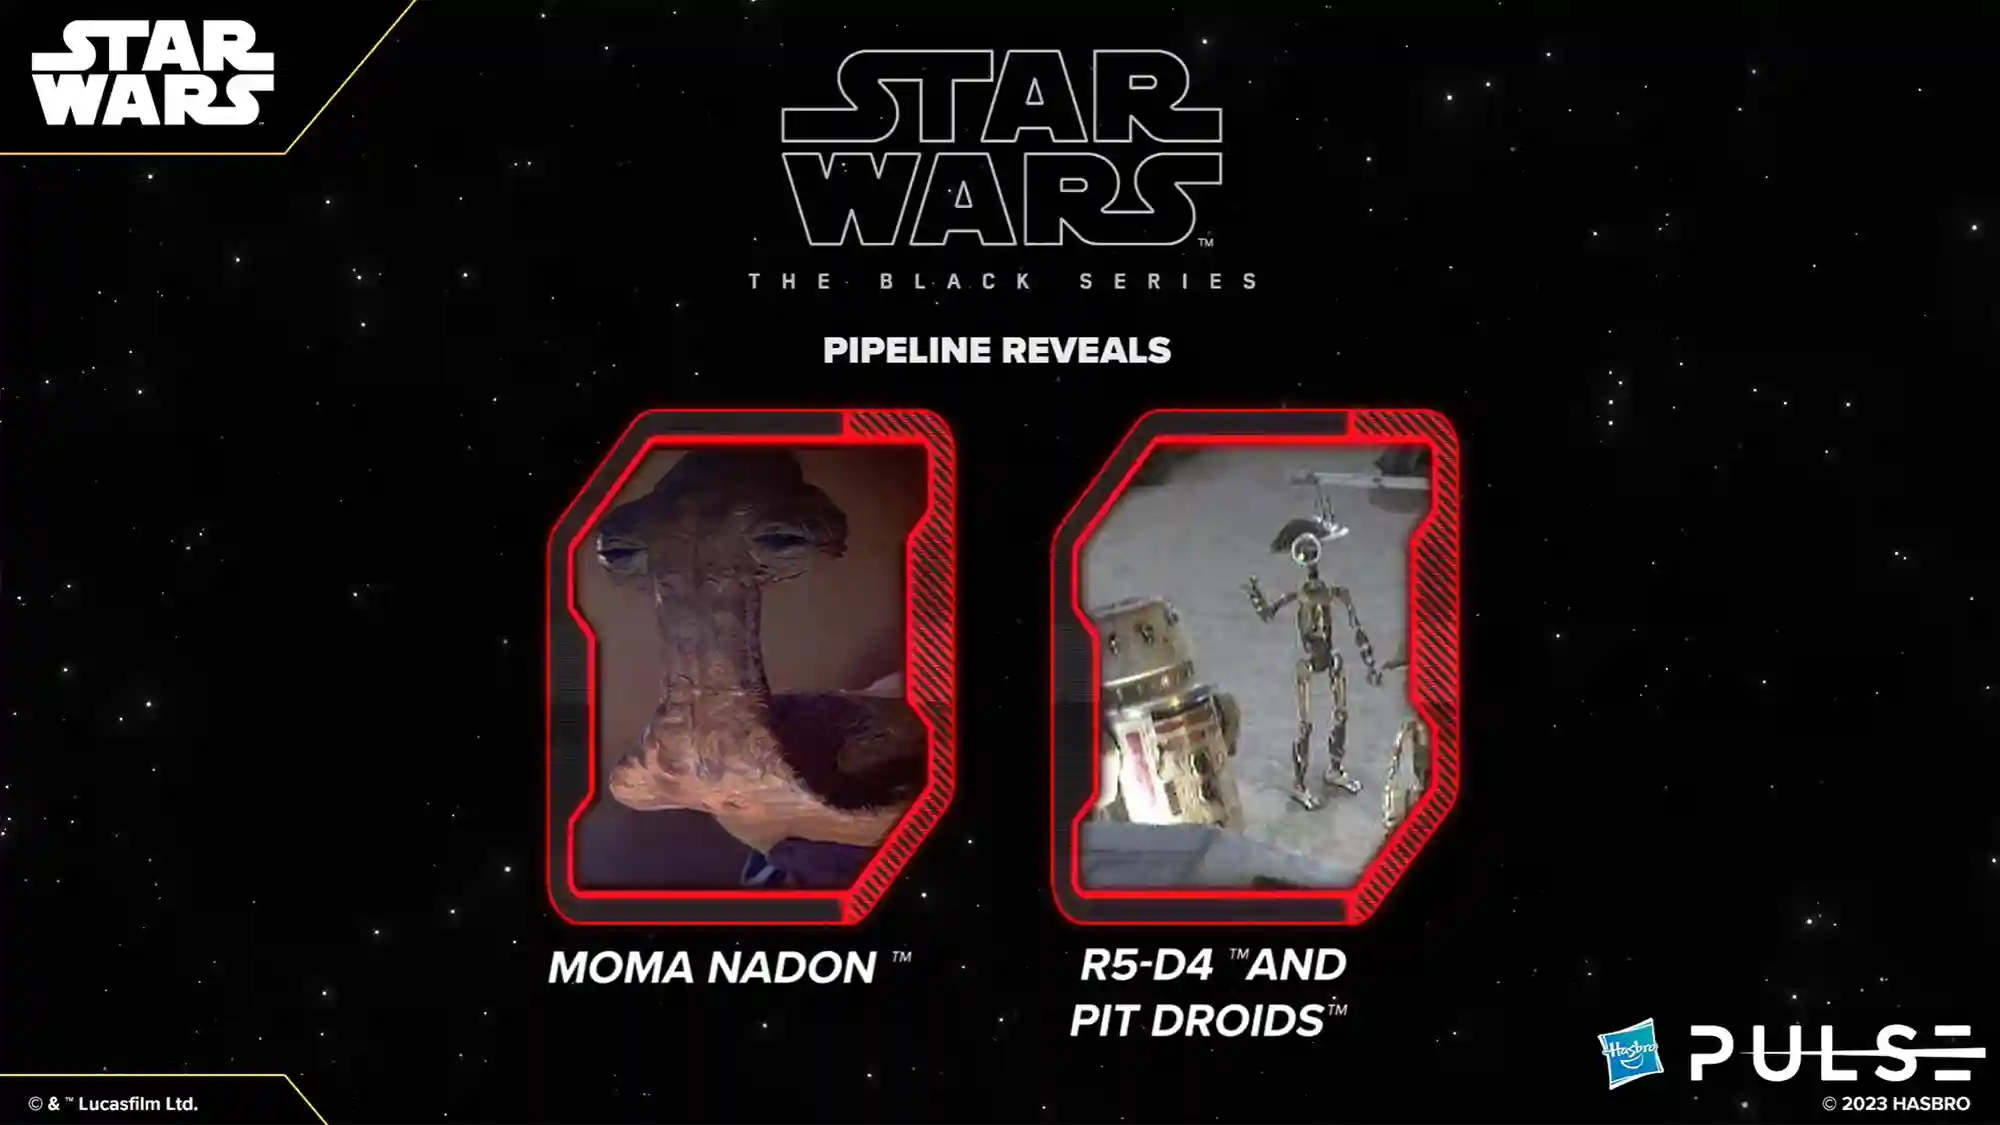 Star Wars The Black Series Pipeline reveals